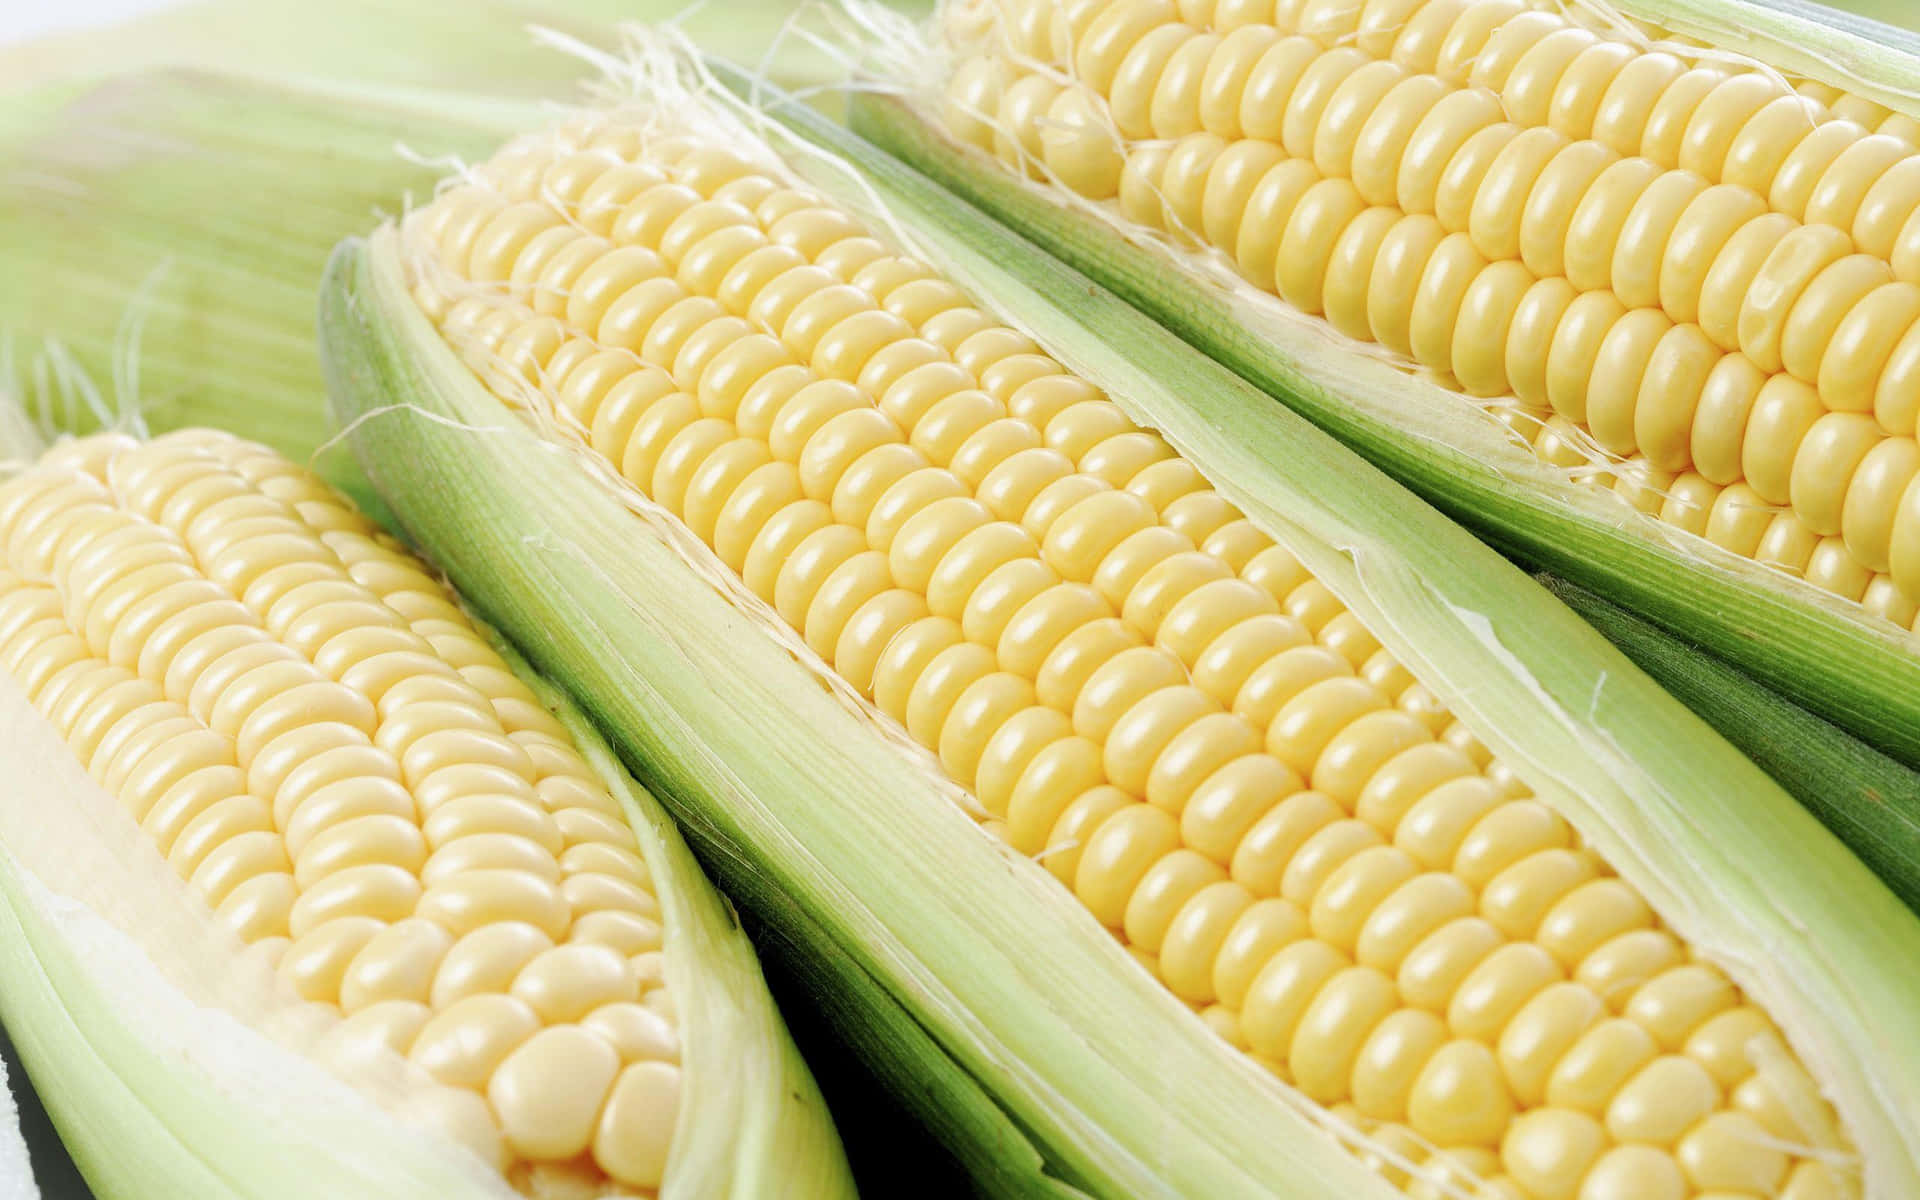 A Close Up Of Corn On The Cob